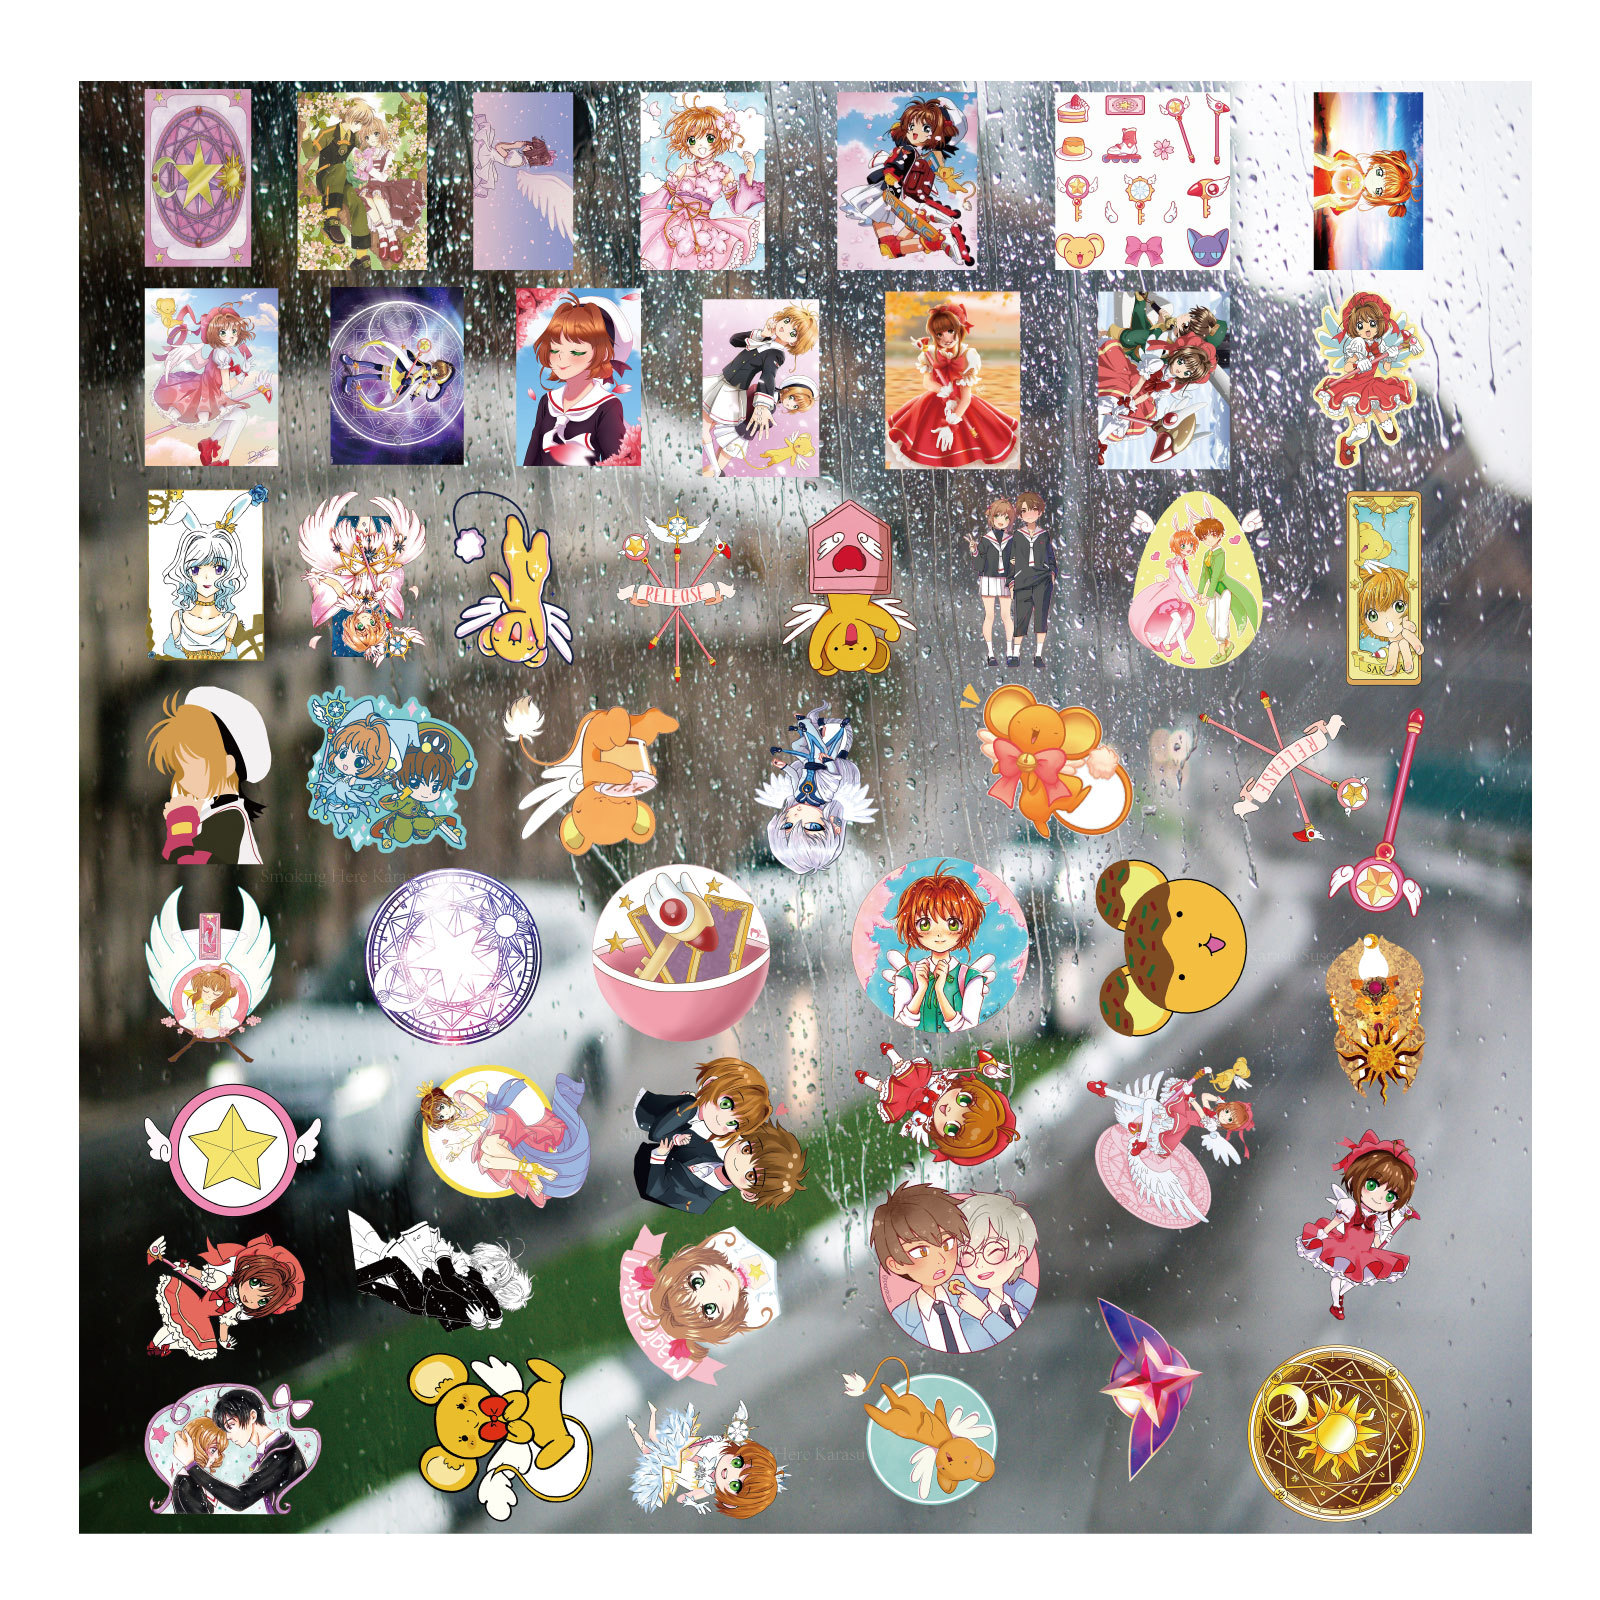 Card Captor Sakura anime 3D sticker price for a set of 50pcs